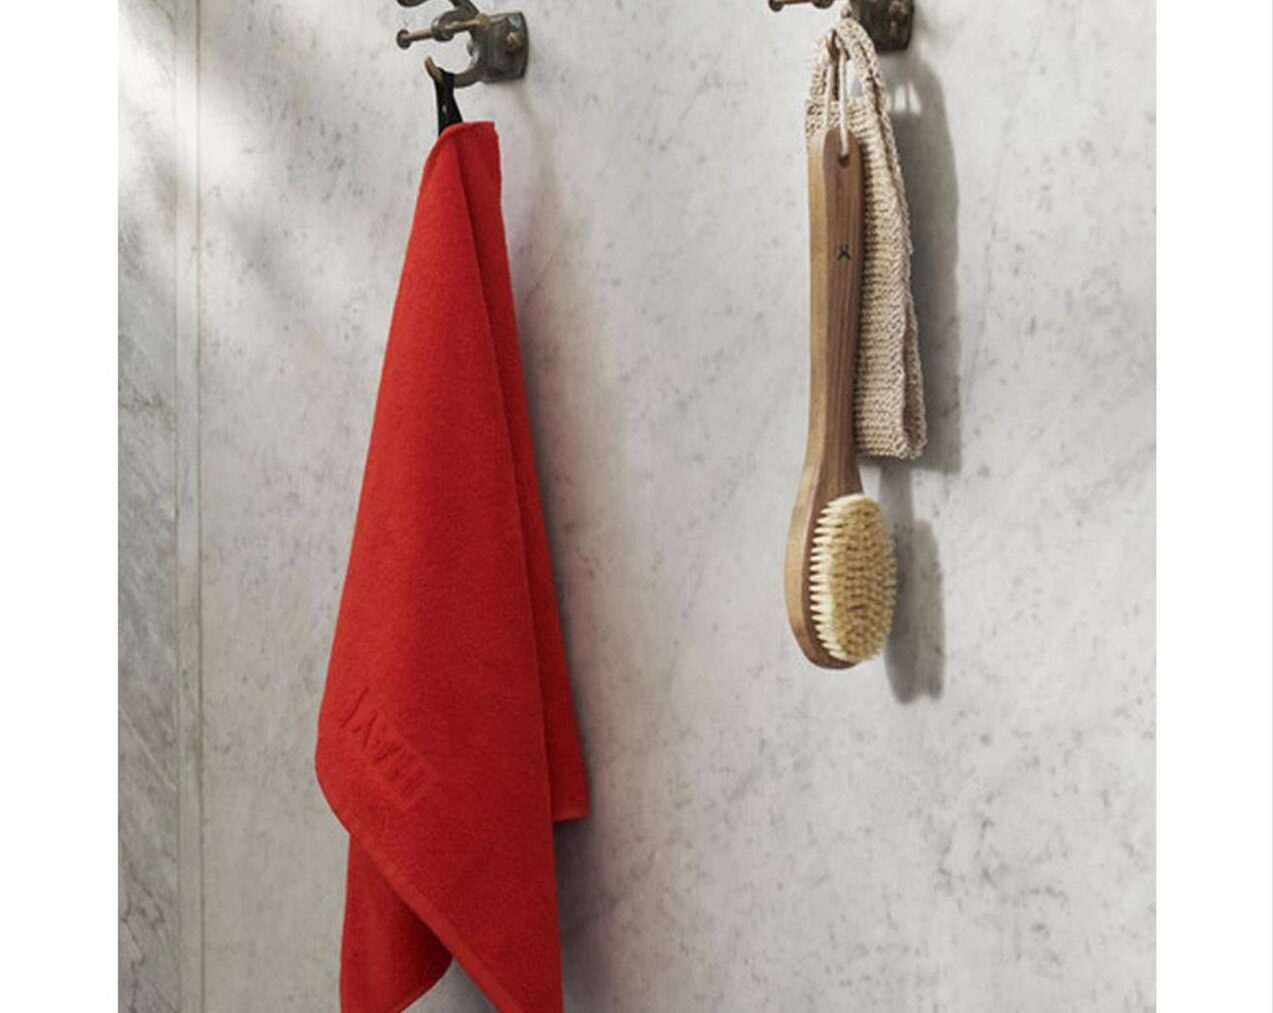 Mono-Hand-Towel-Matcha